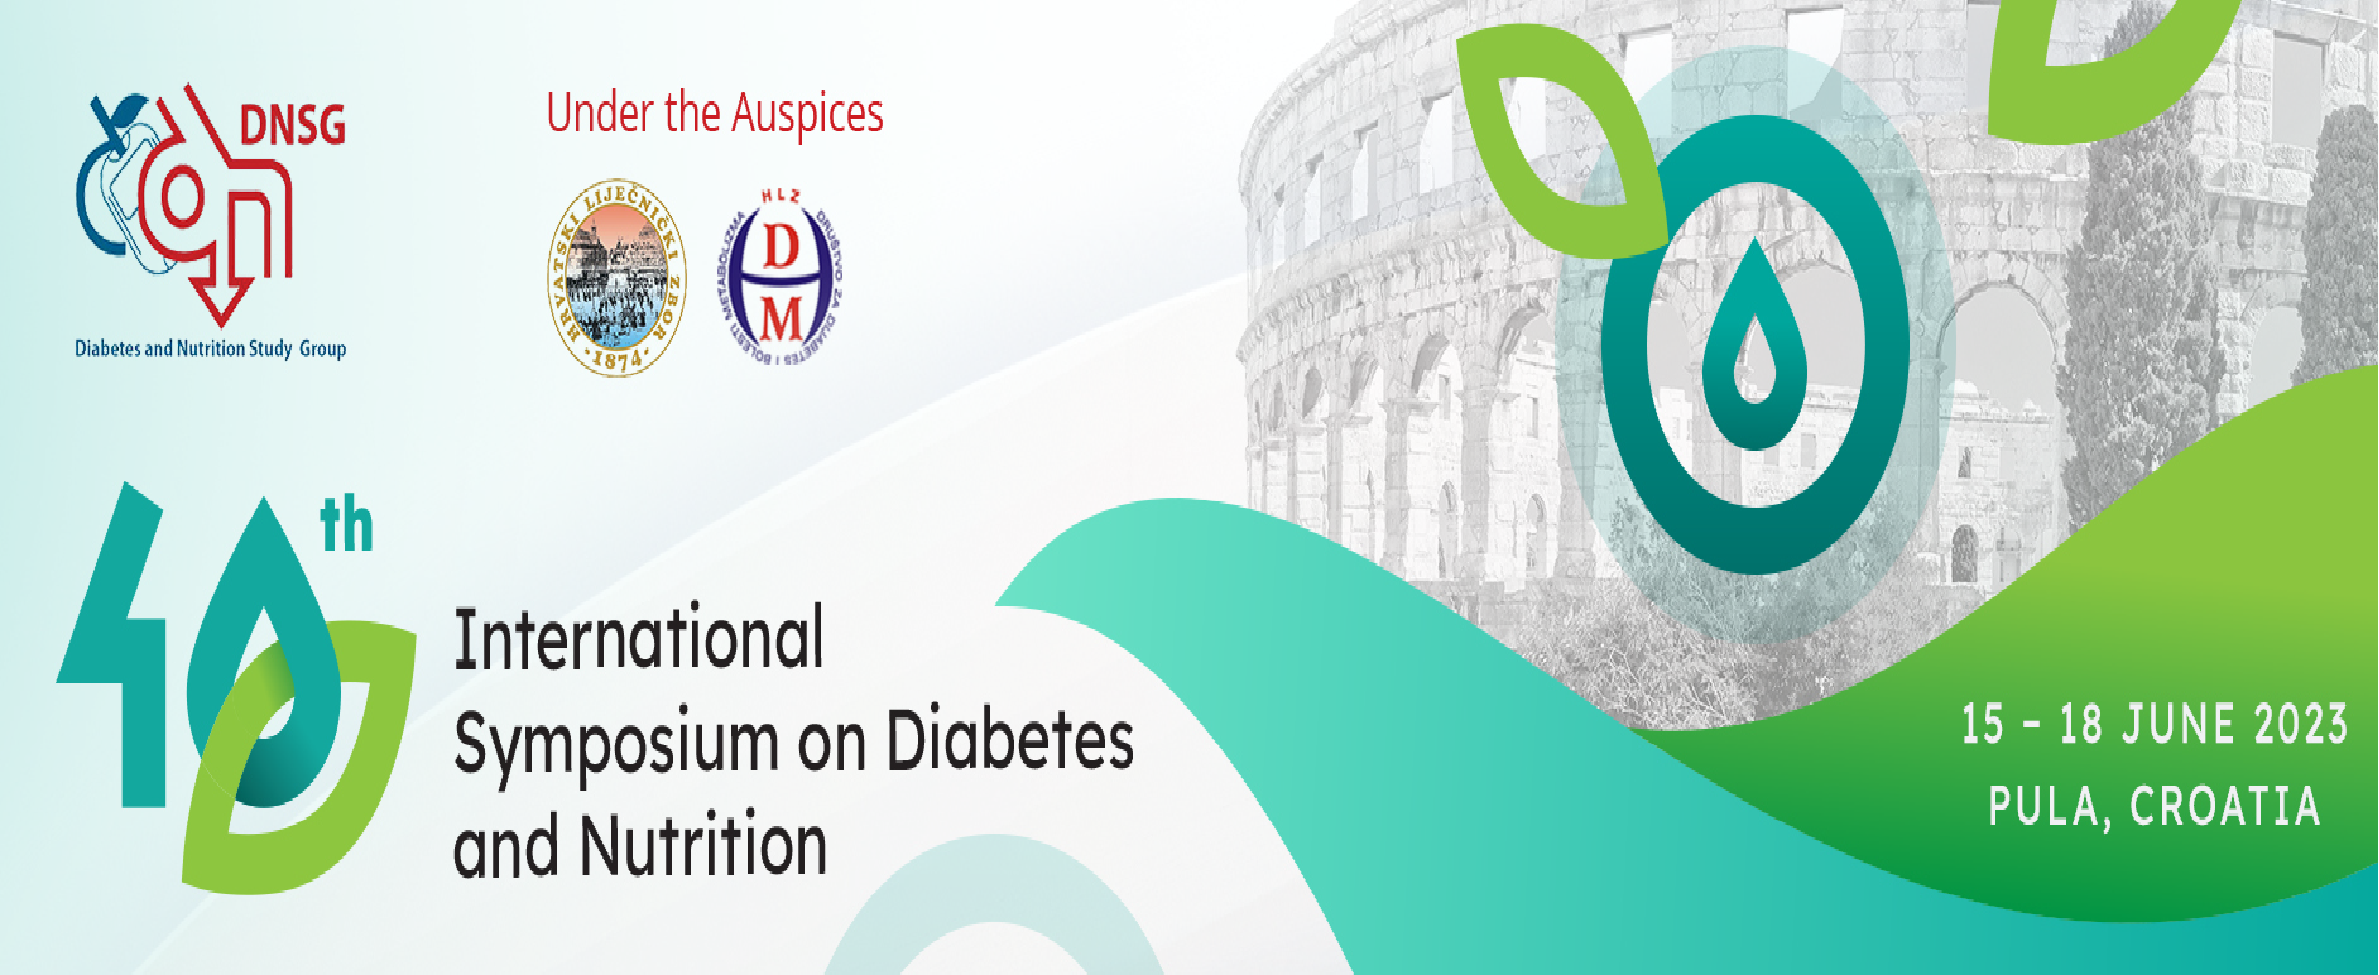 40th International Symposium on Diabetes and Nutrition - DNSG 2023